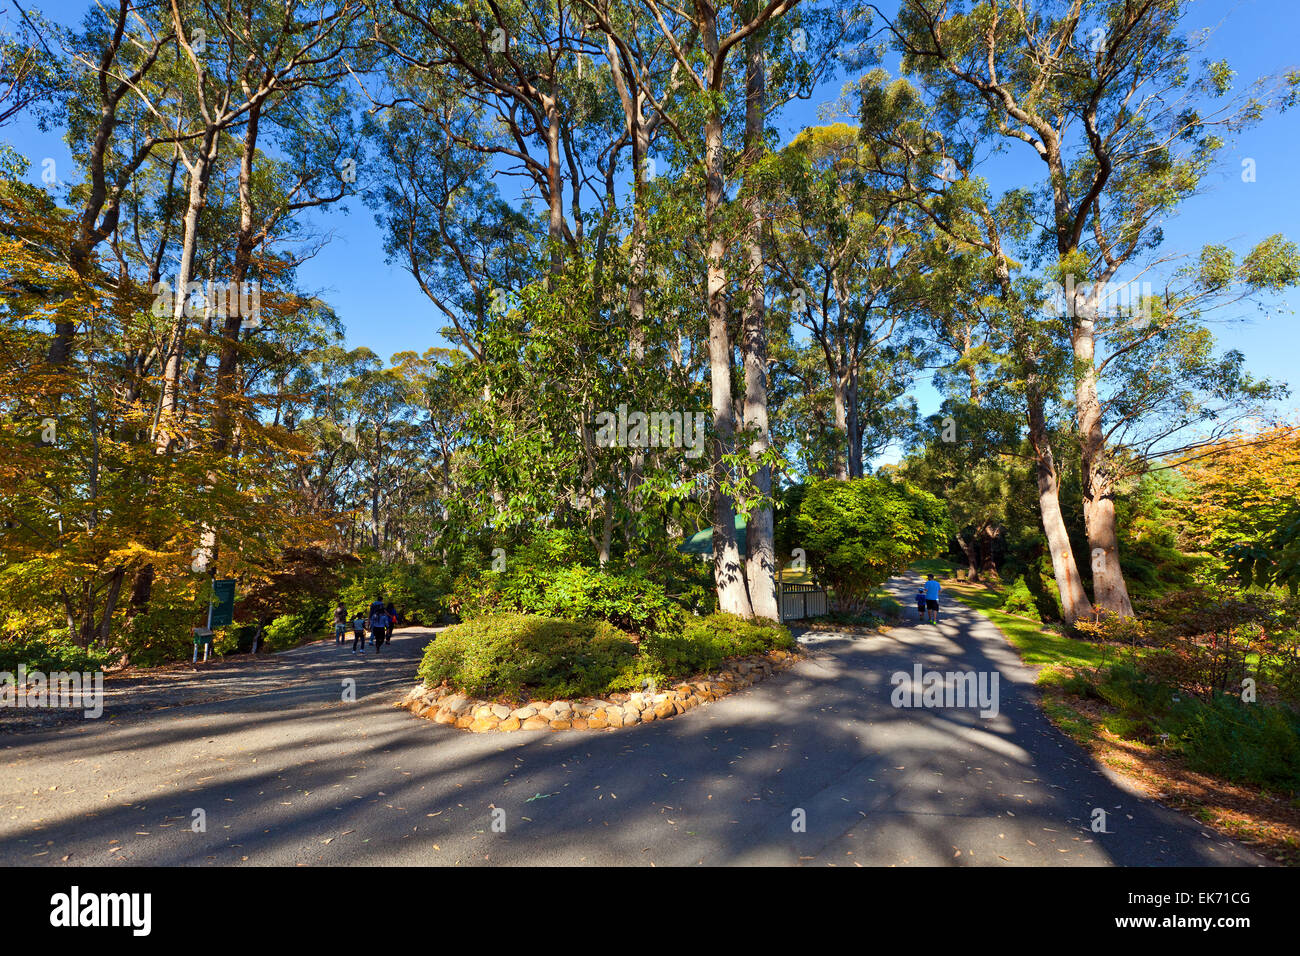 Mt hohen botanischen Garten Adelaide Hills South Australia australischen Landschaft Landschaften Herbst Stockfoto